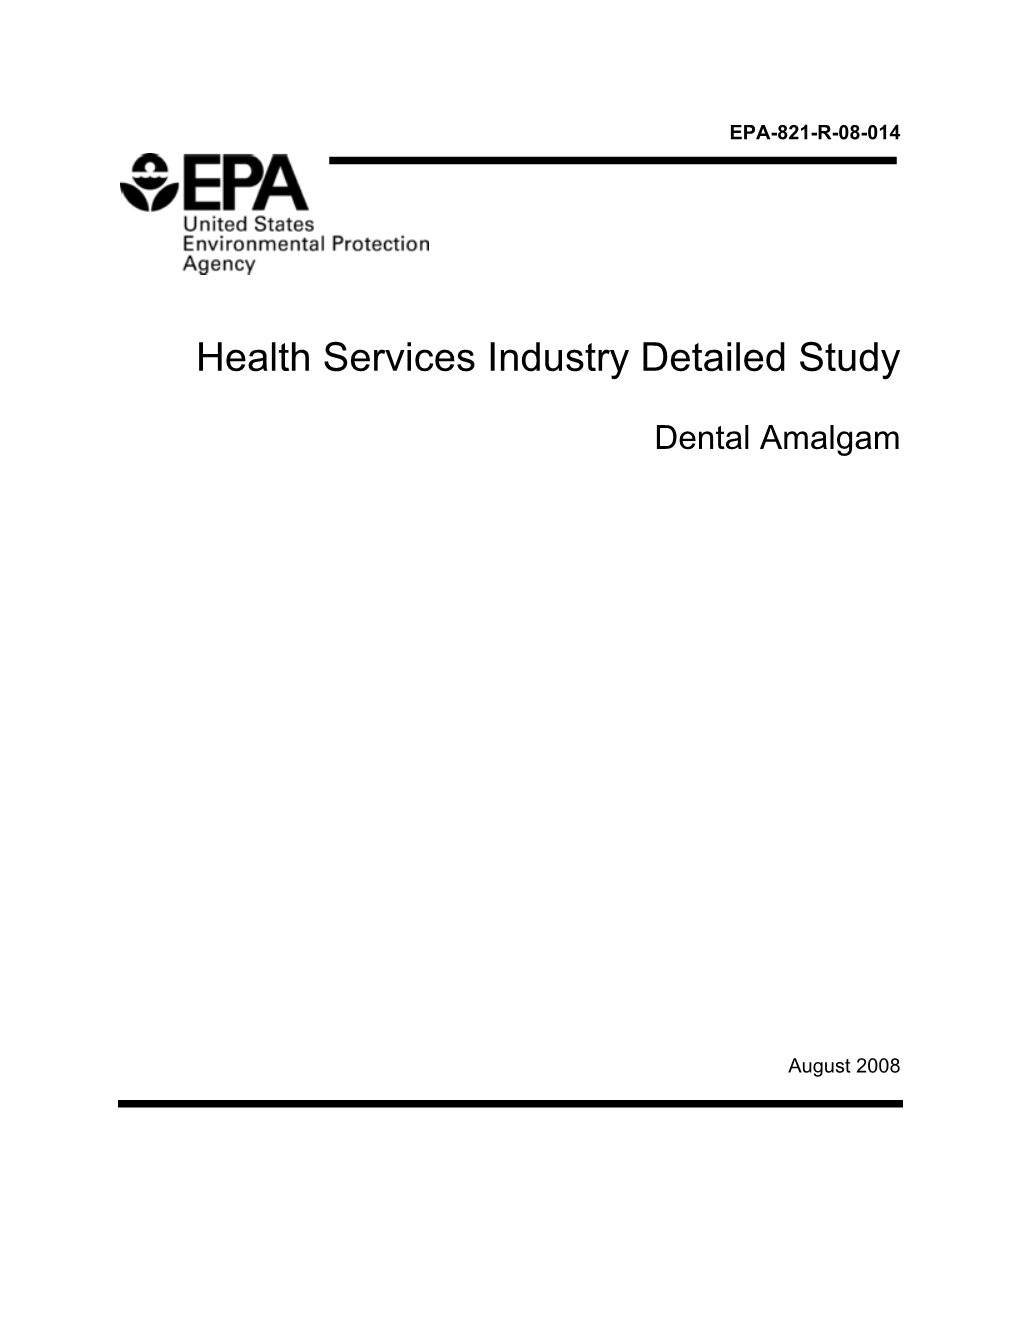 EPA's 2008 Health Services Industry Detailed Study: Dental Amalgam